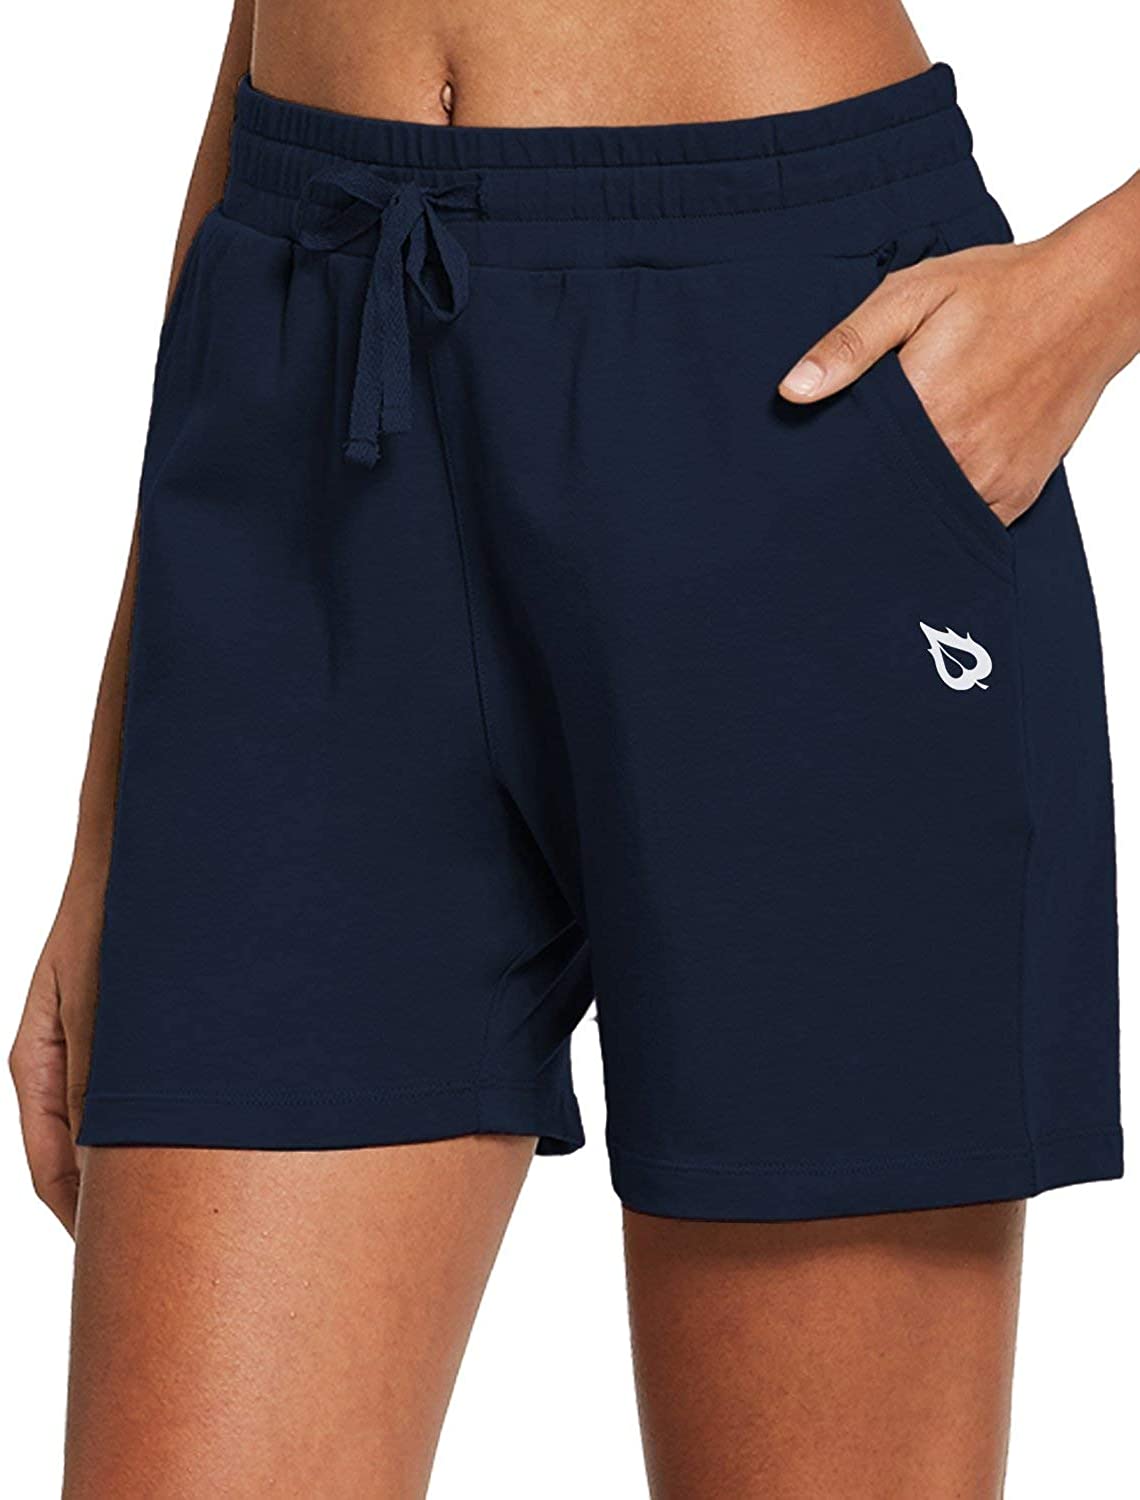 Tandisk Womens 5 Casual Jersey Cotton Shorts Lounge Yoga Pajama Walking Shorts with Pockets Activewear 